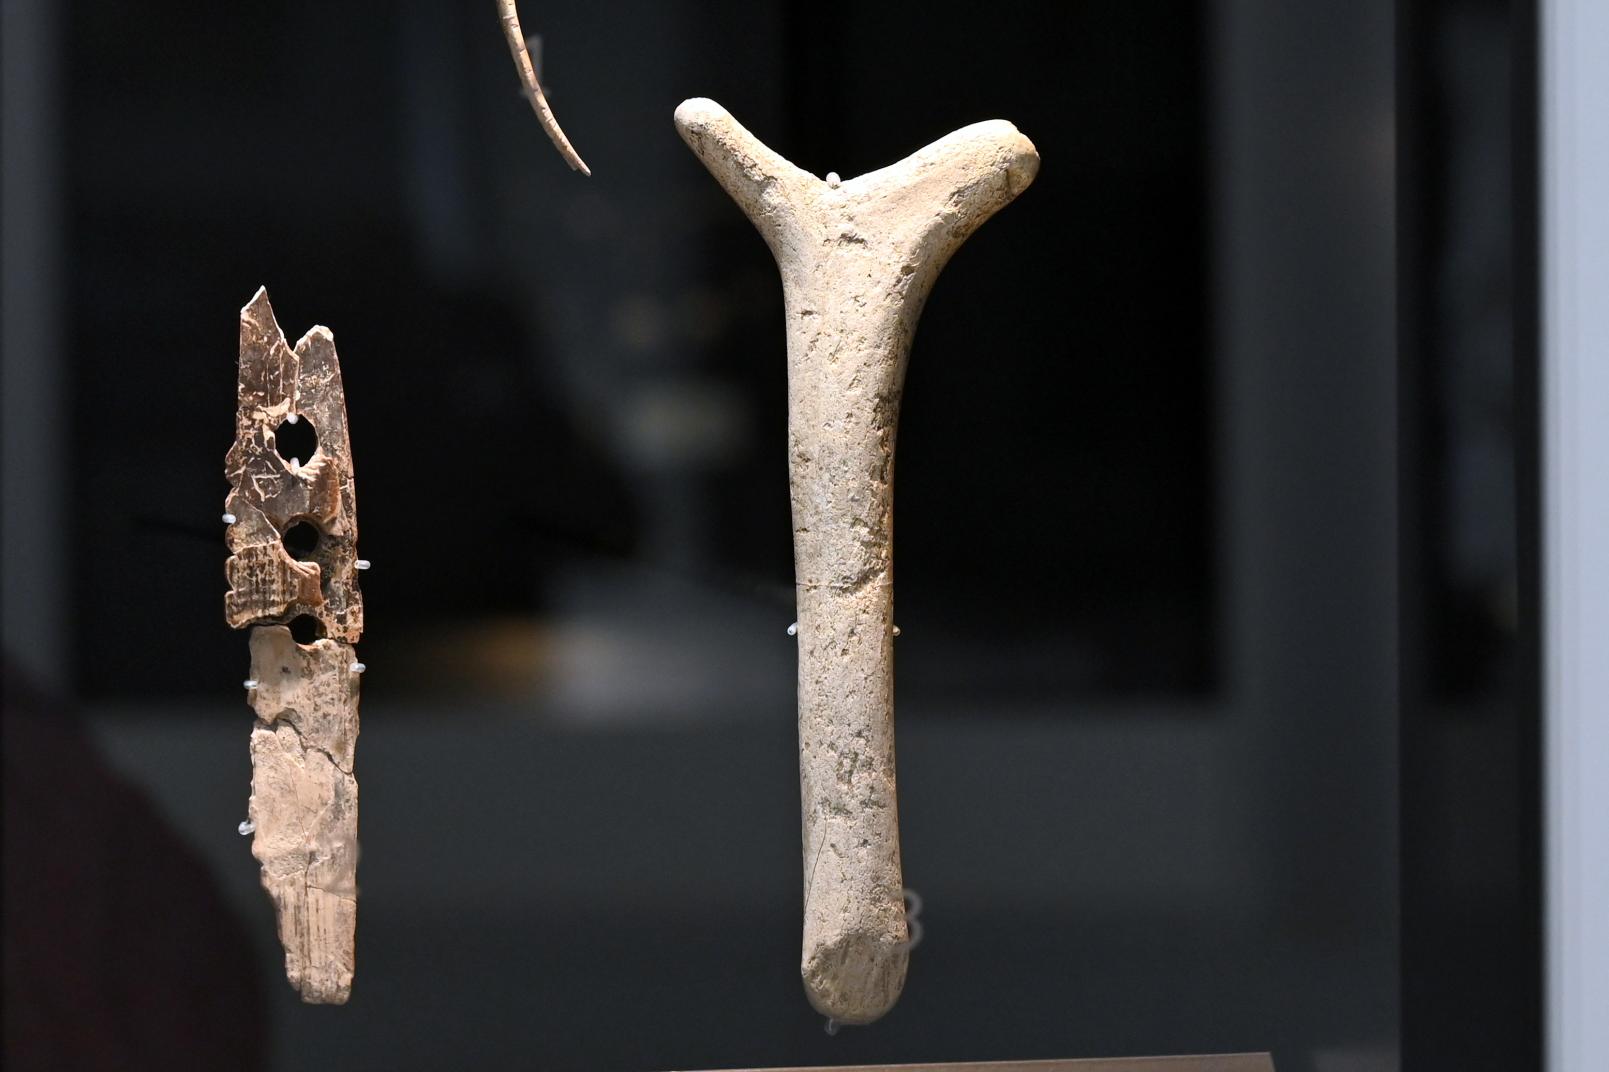 Trommelschlägel, 10000 v. Chr.